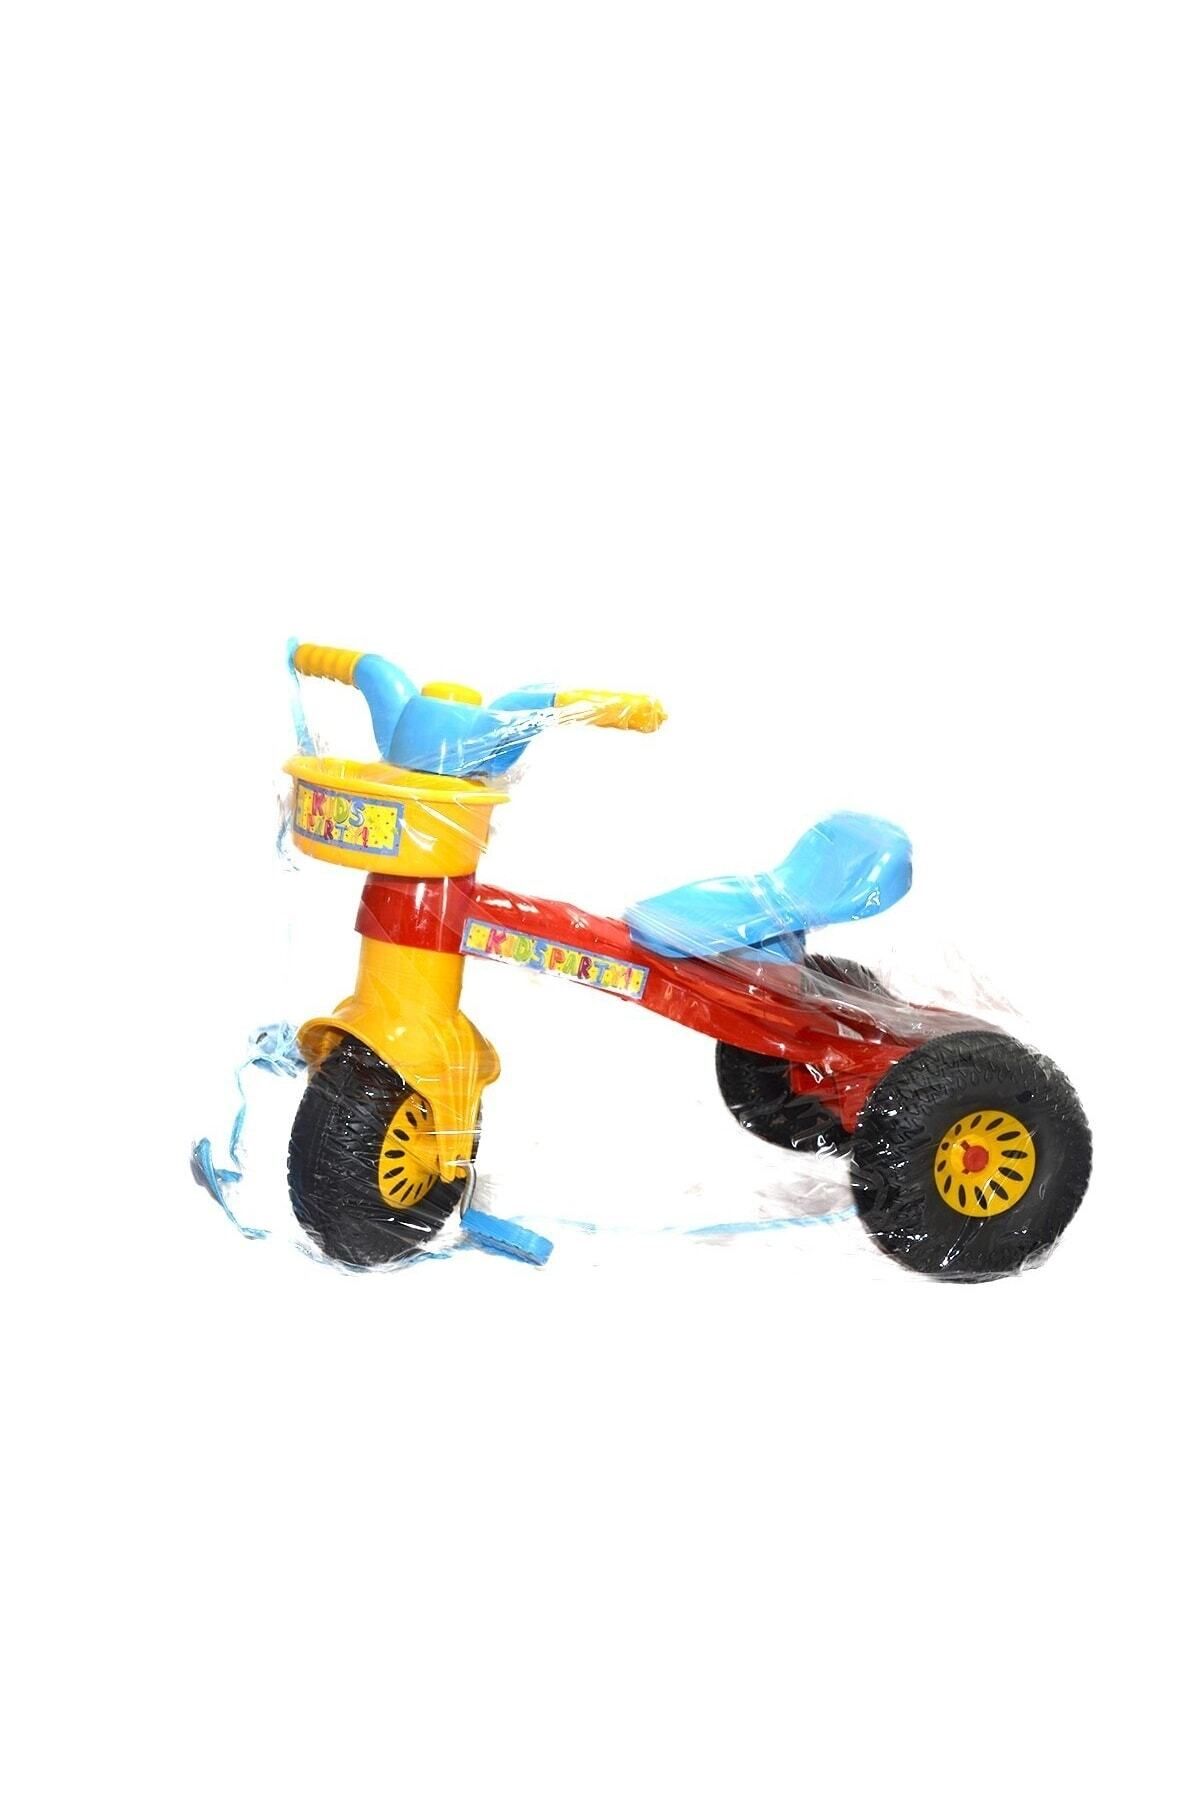 MEDITERIAN Metalik Marka: Efe Toys 721 Efe Toys, Ilk Bisikletim Kategori: Çocuk Bisikleti 3+ Yaş 2